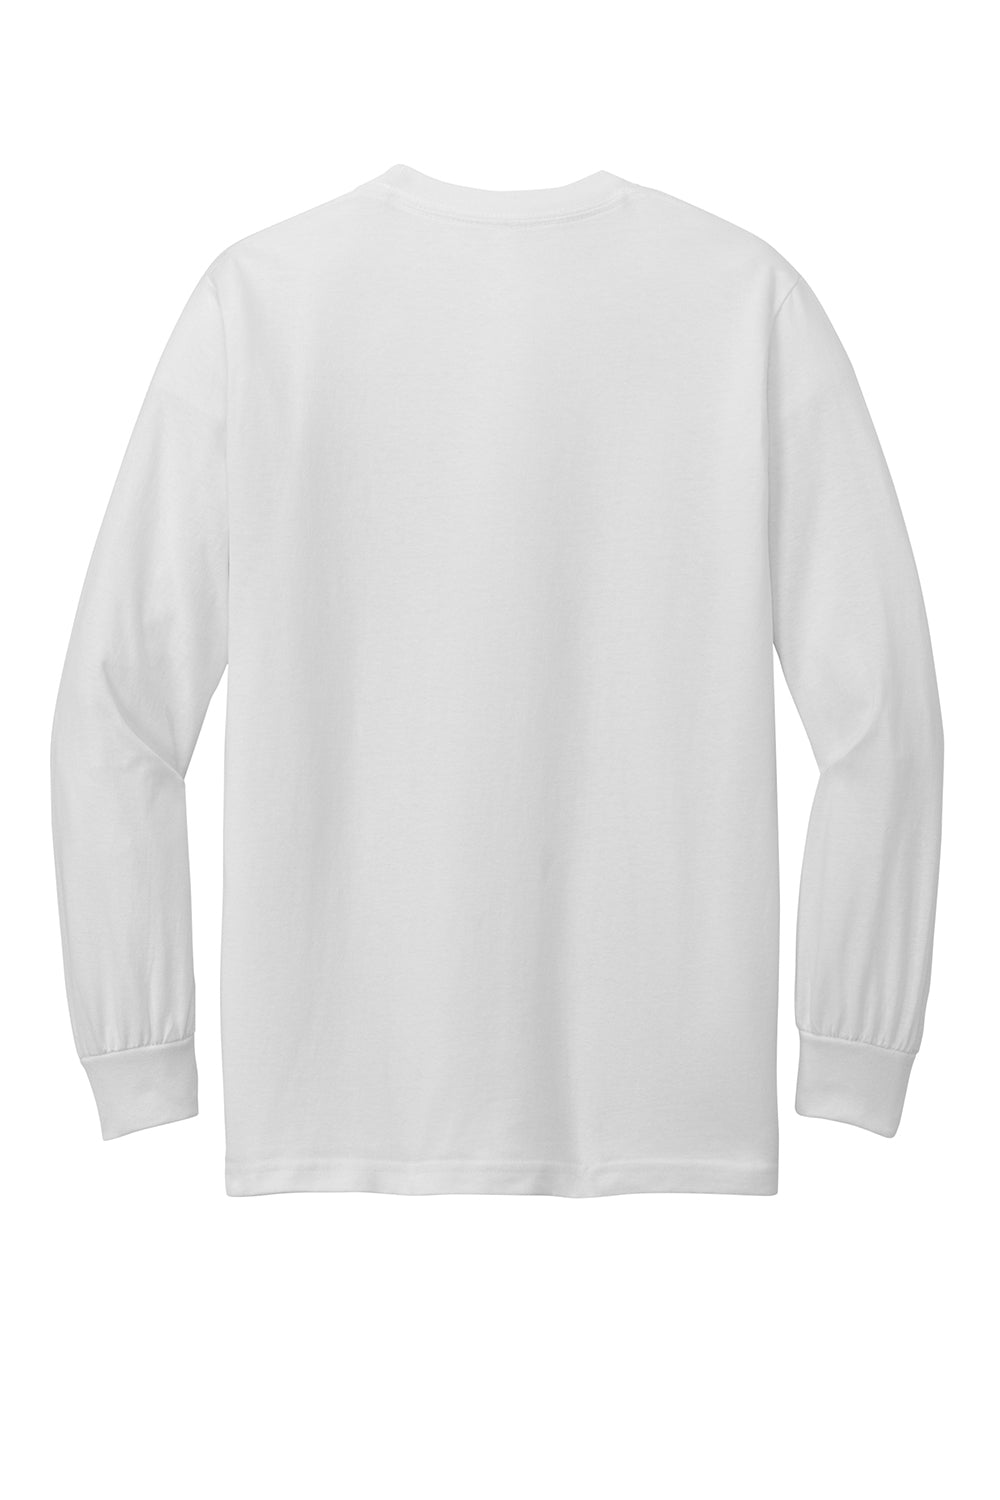 American Apparel AL1304/1304 Mens Long Sleeve Crewneck T-Shirt White Model Flat Back